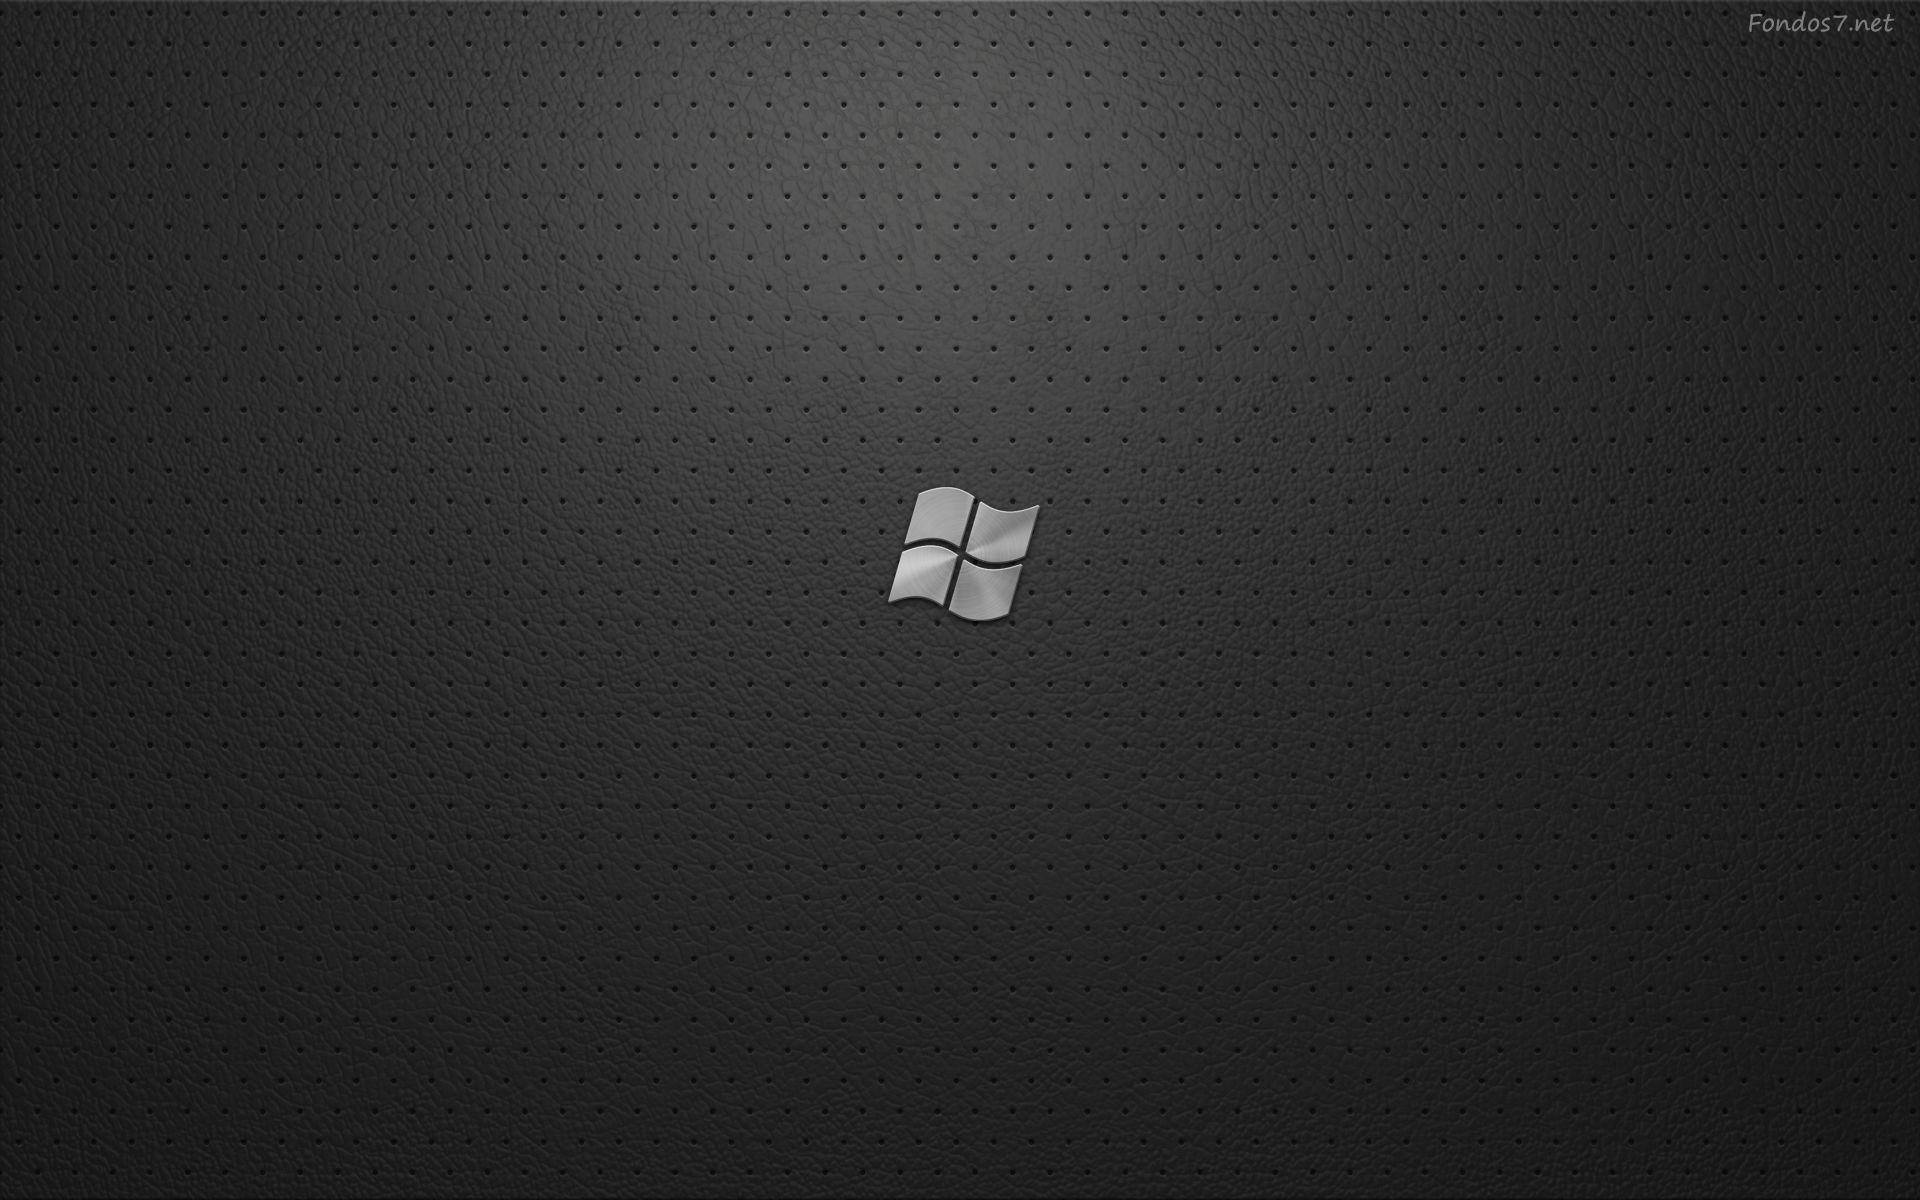 Black Windows Logo - Sun Wood Windows Logo Wallpaper and Background Image